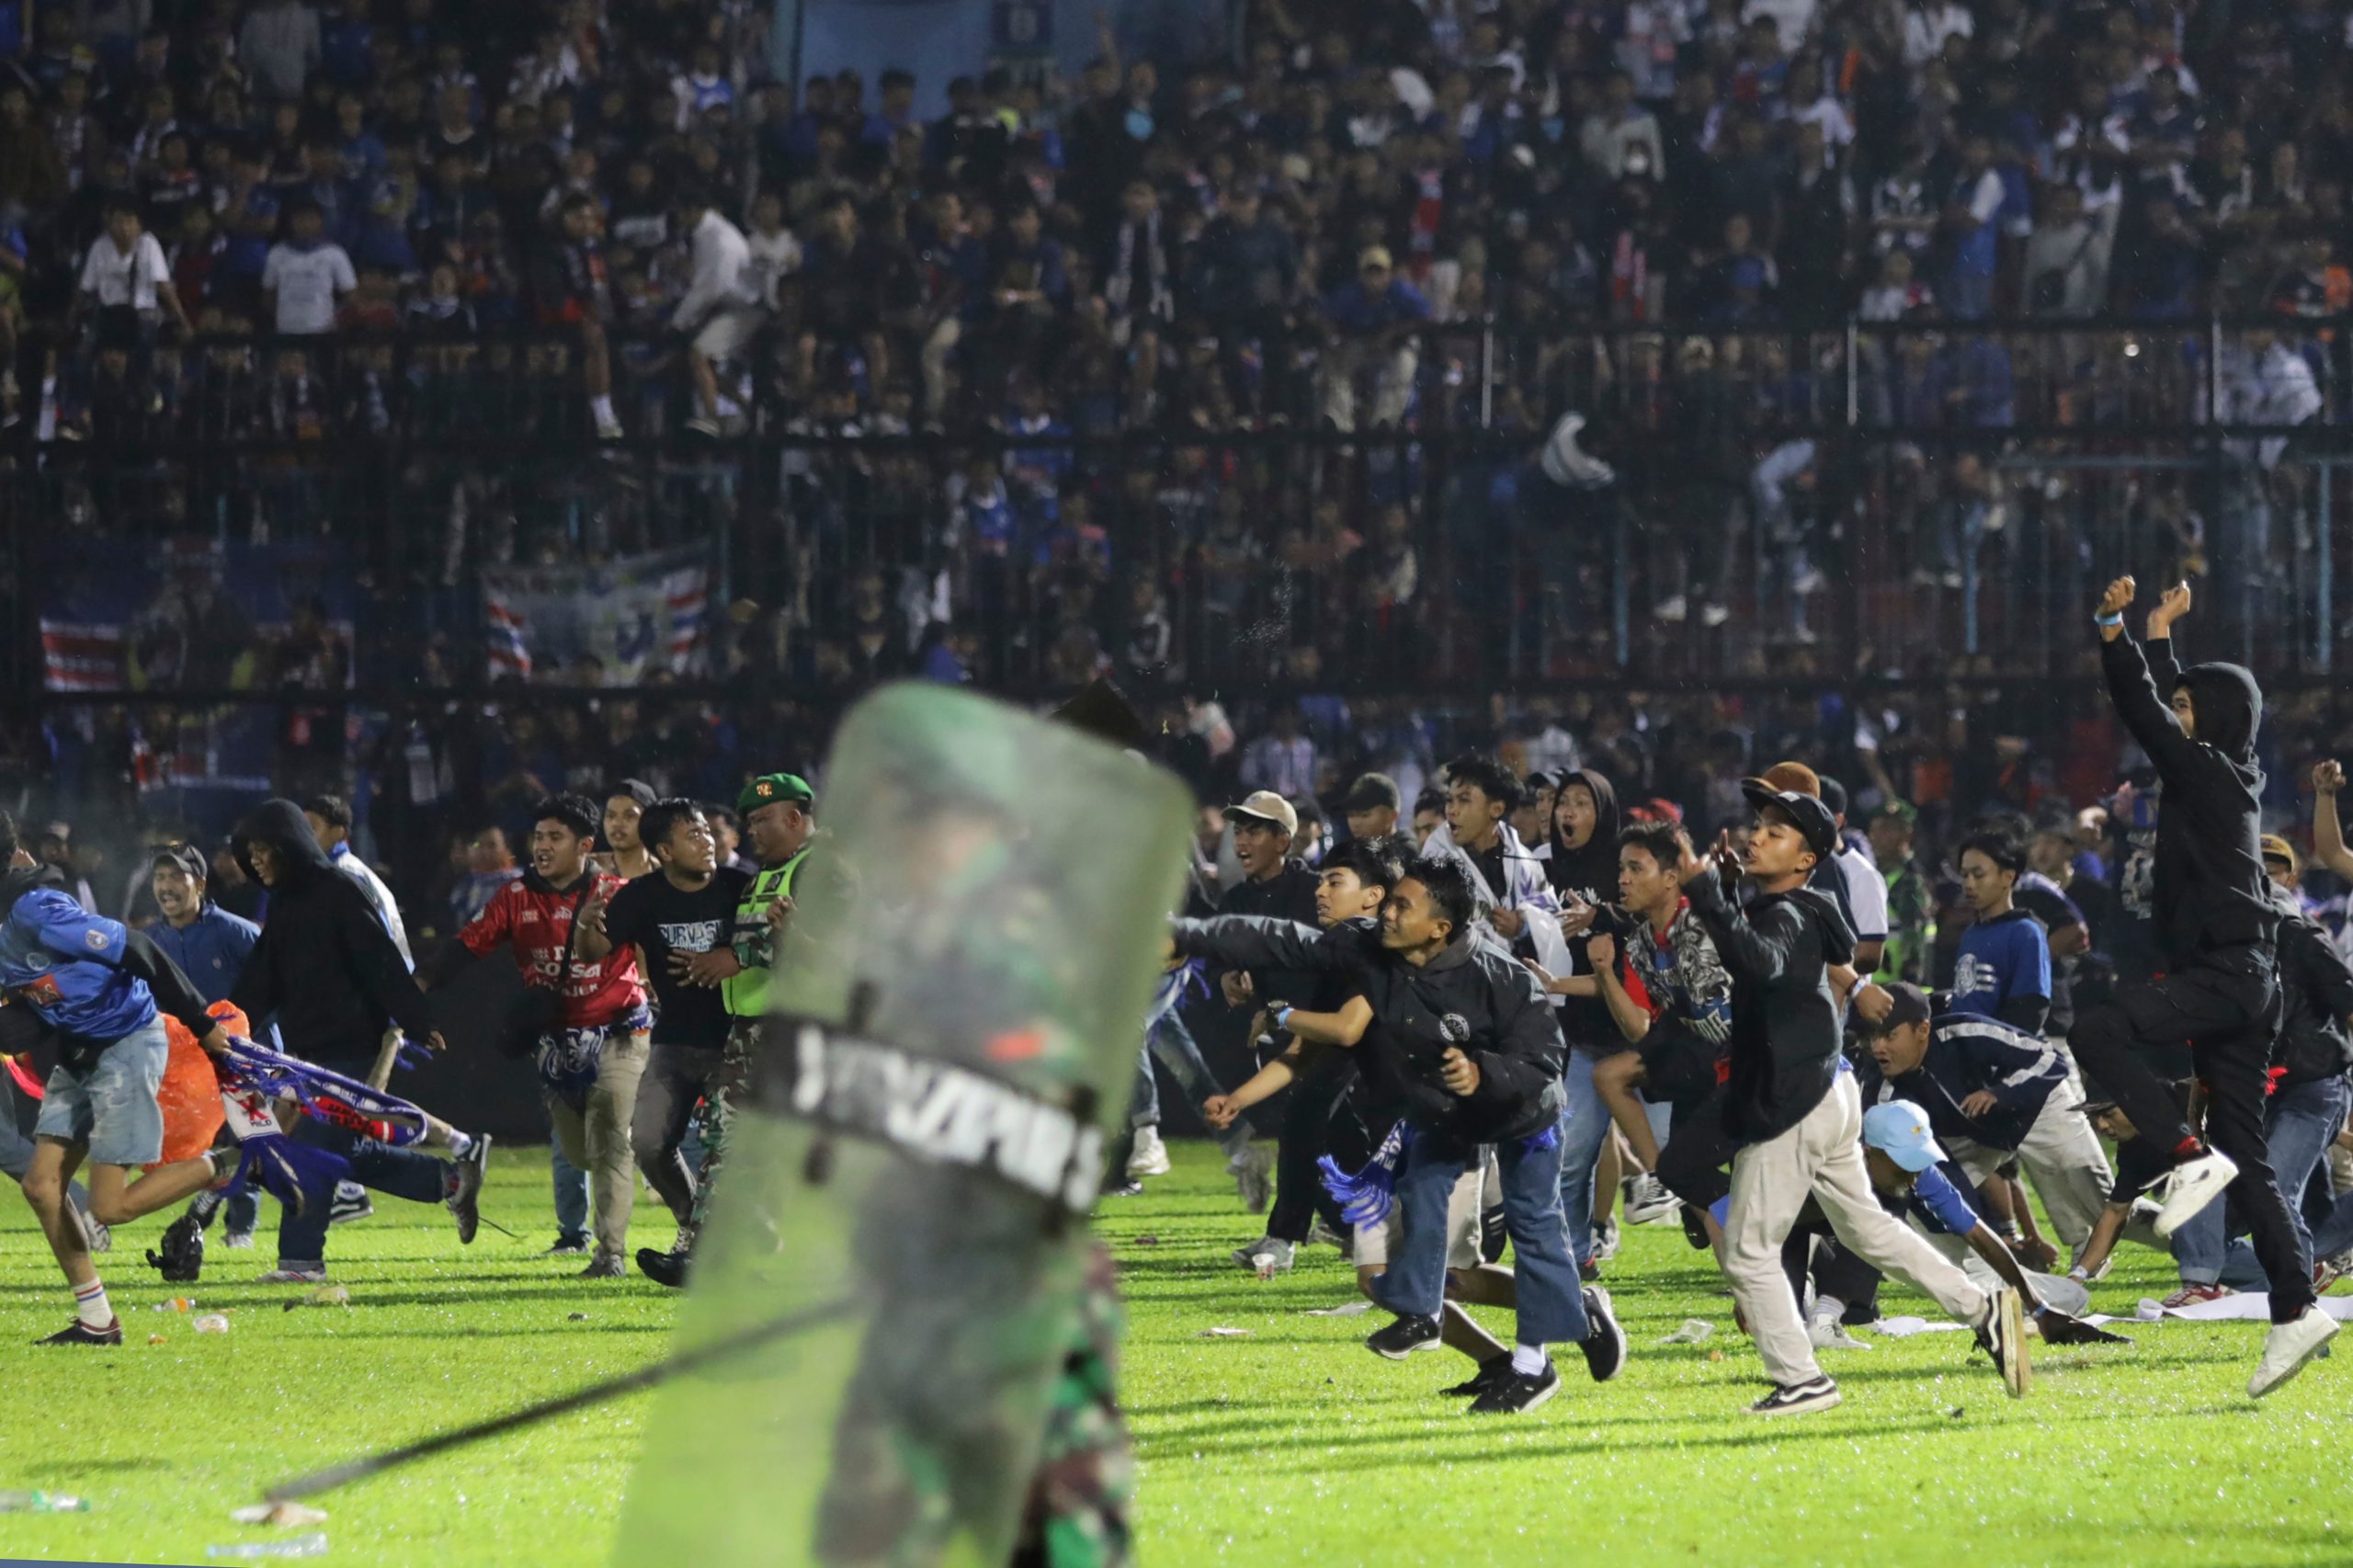 Indonesia Kanjuruhan Stadium stampede: At least 125 people dead